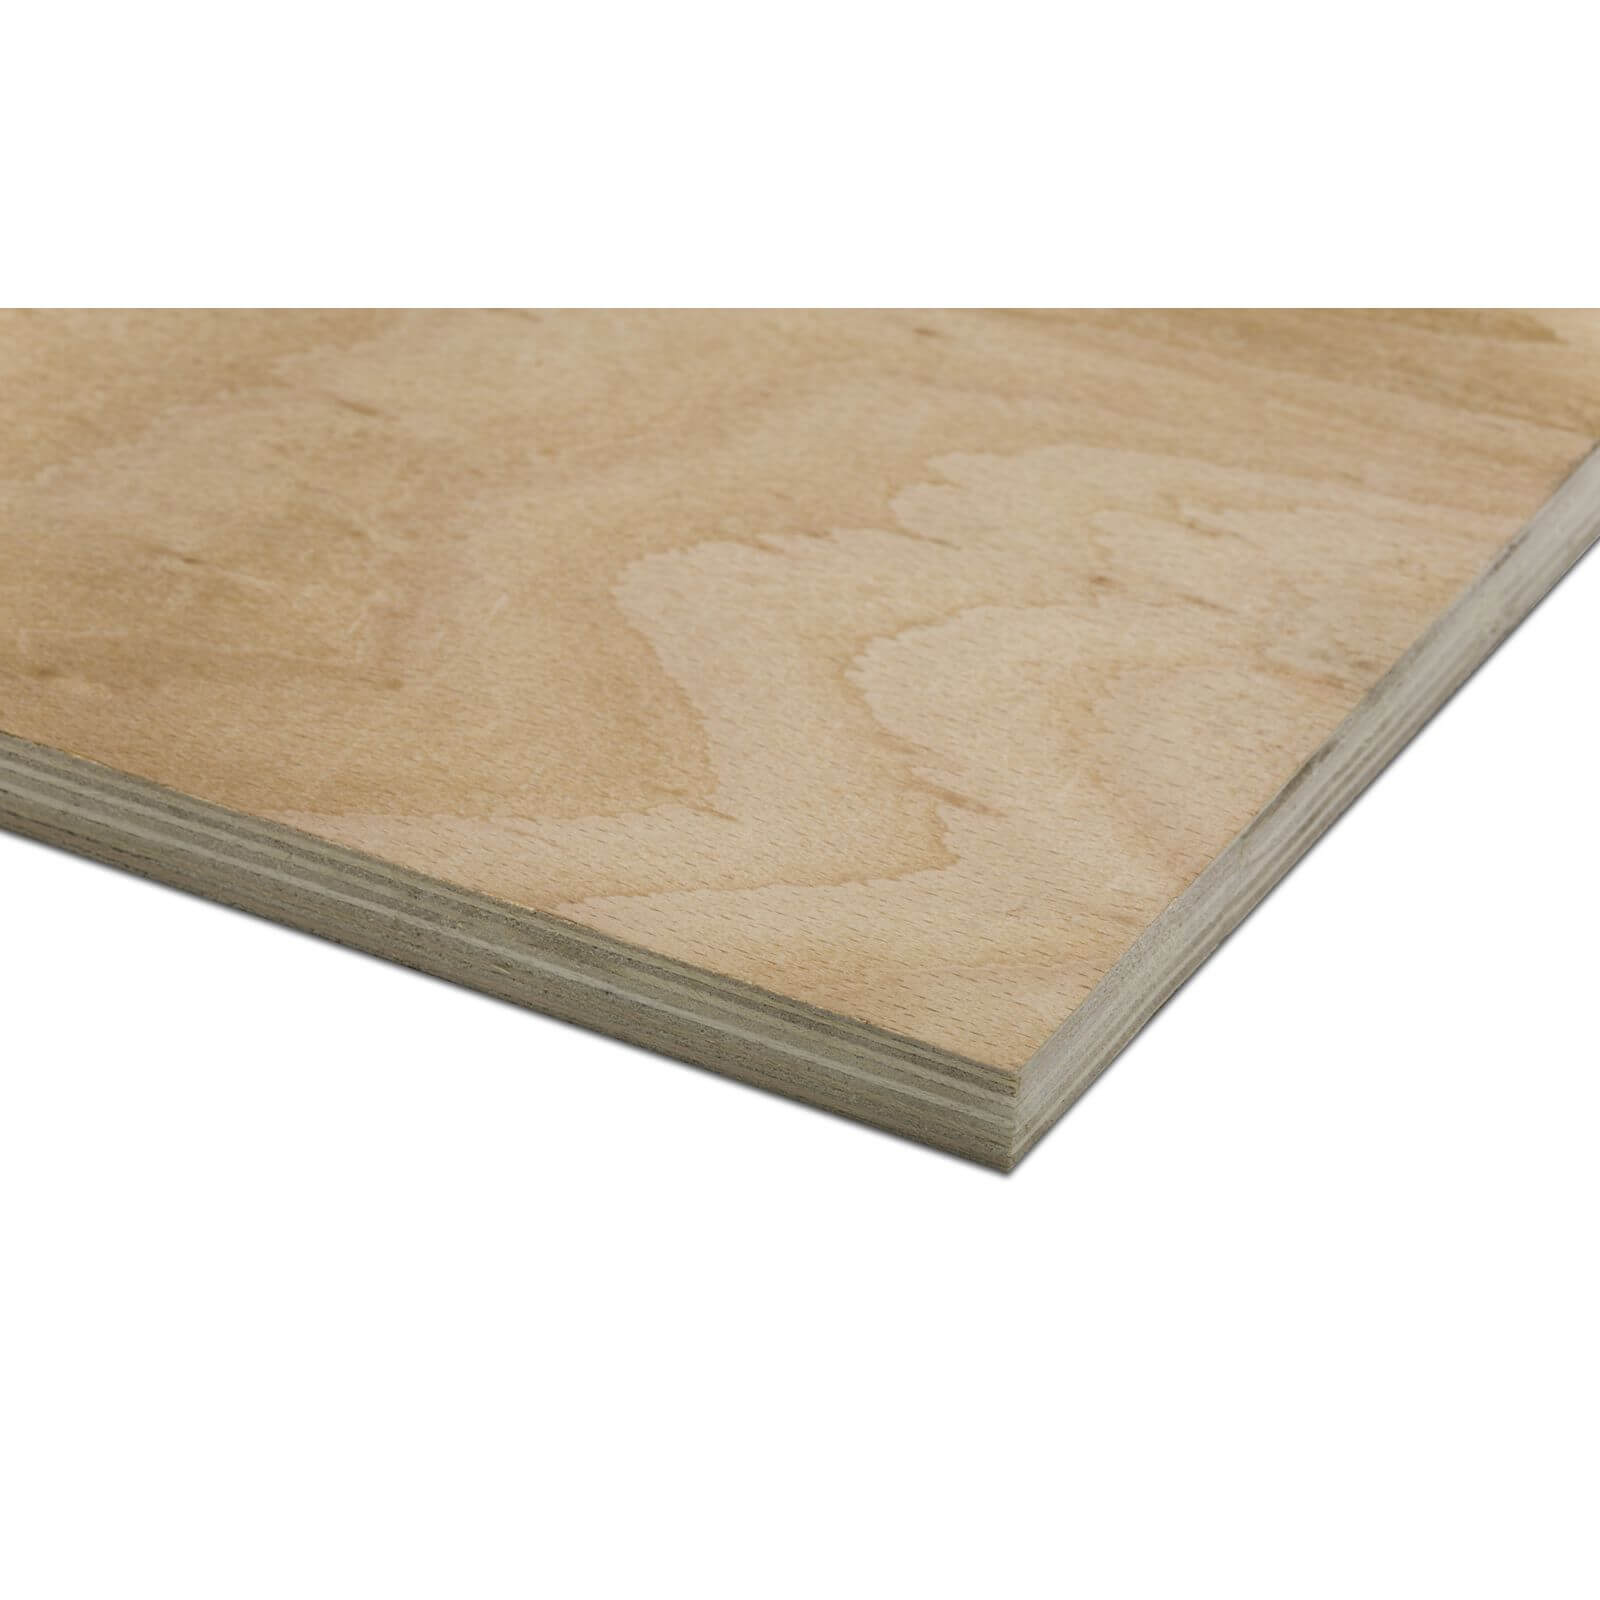 Metsa Hardwood Plywood Board 1.2m (1220 x 607 x 18mm)